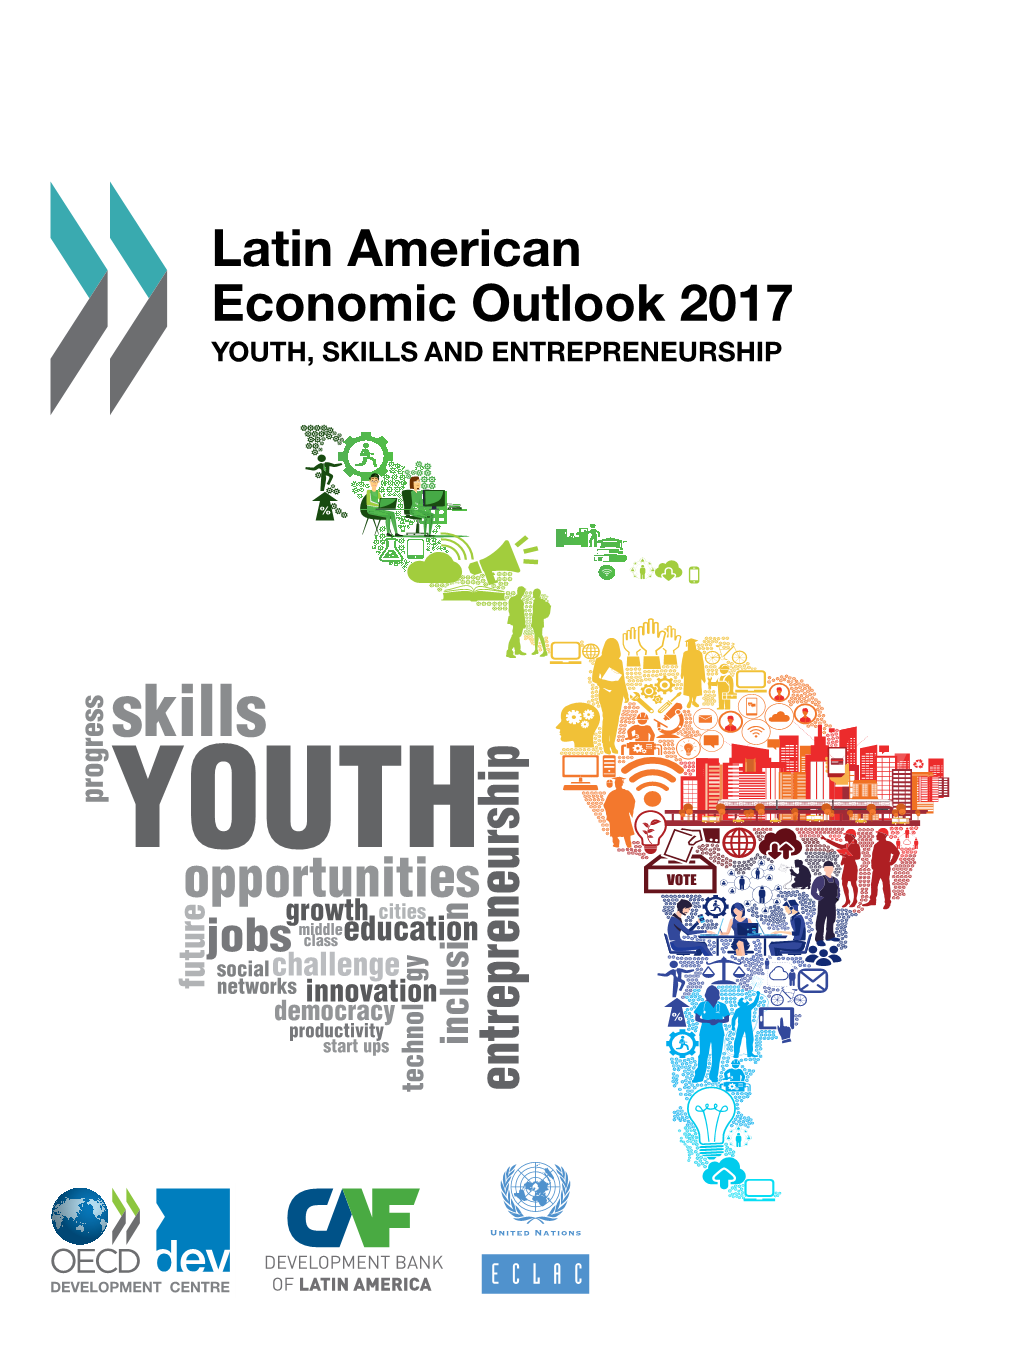 Latin American Economic Outlook 2017: Youth, Skills and Entrepreneurship, OECD Publishing, Paris